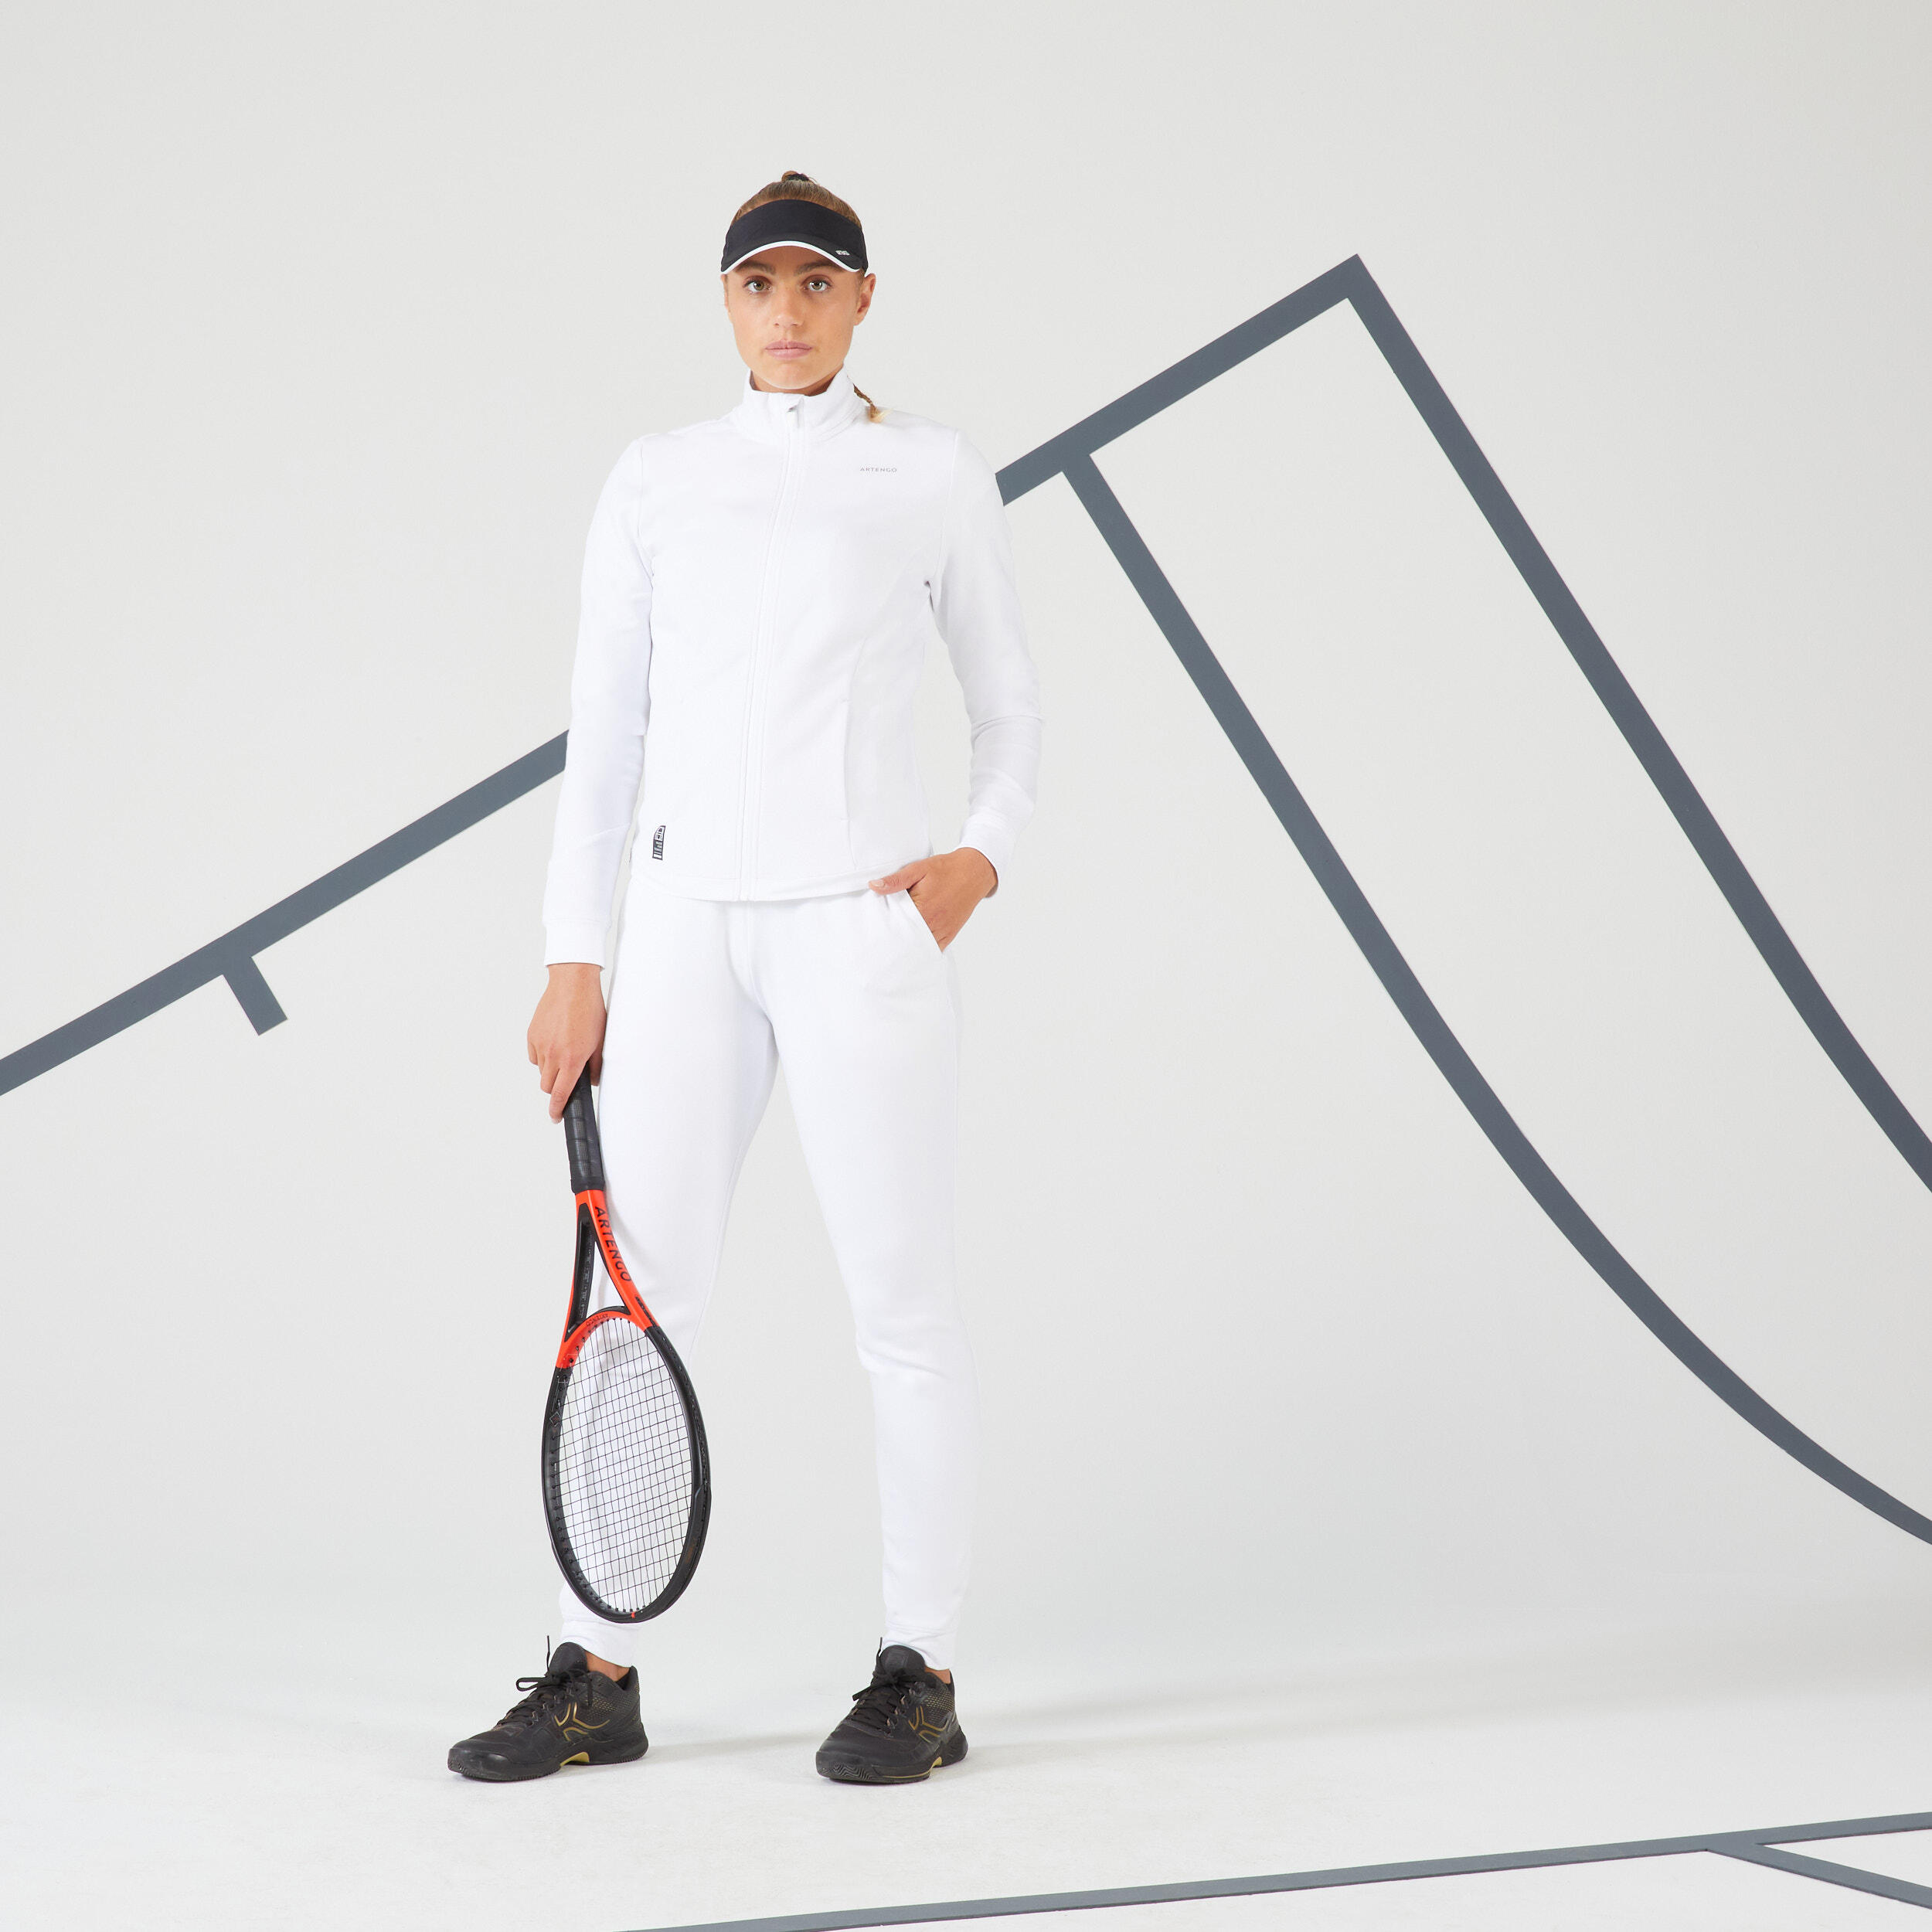 Women's Tennis Quick-Dry Soft Jacket Dry 900 - White 3/5